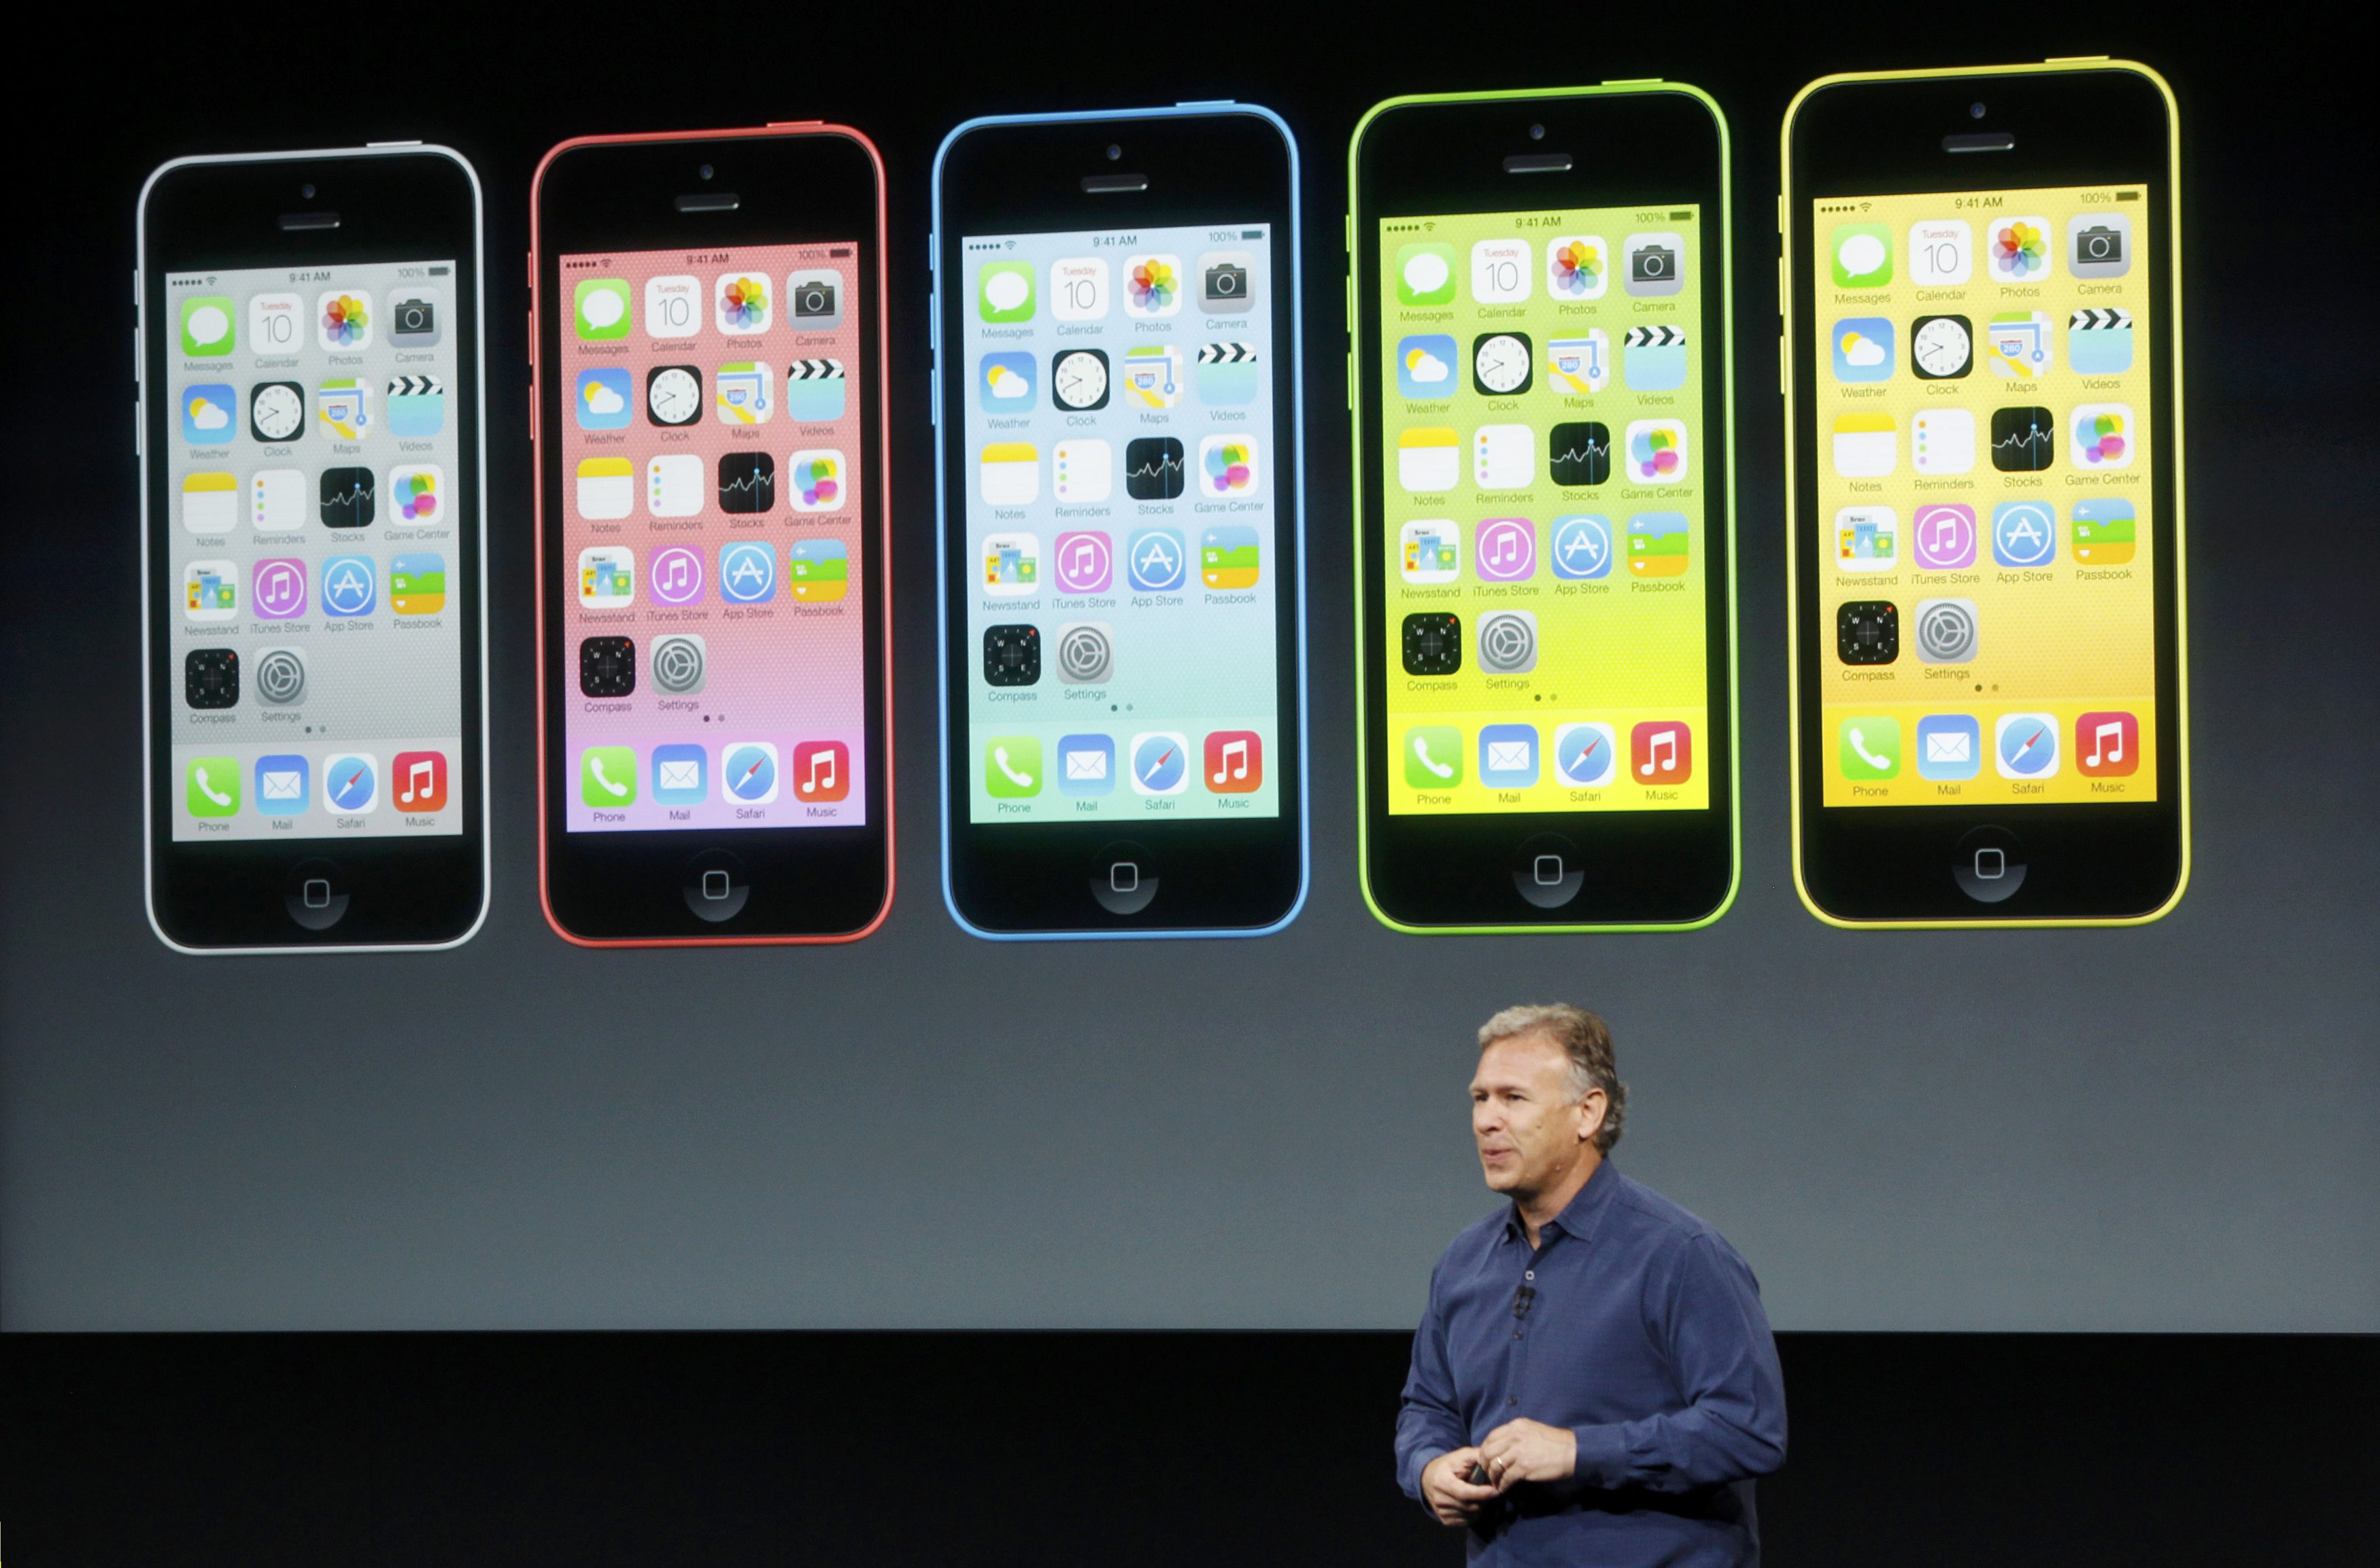 To πολύχρωμο φθηνό iPhone 5C της Apple